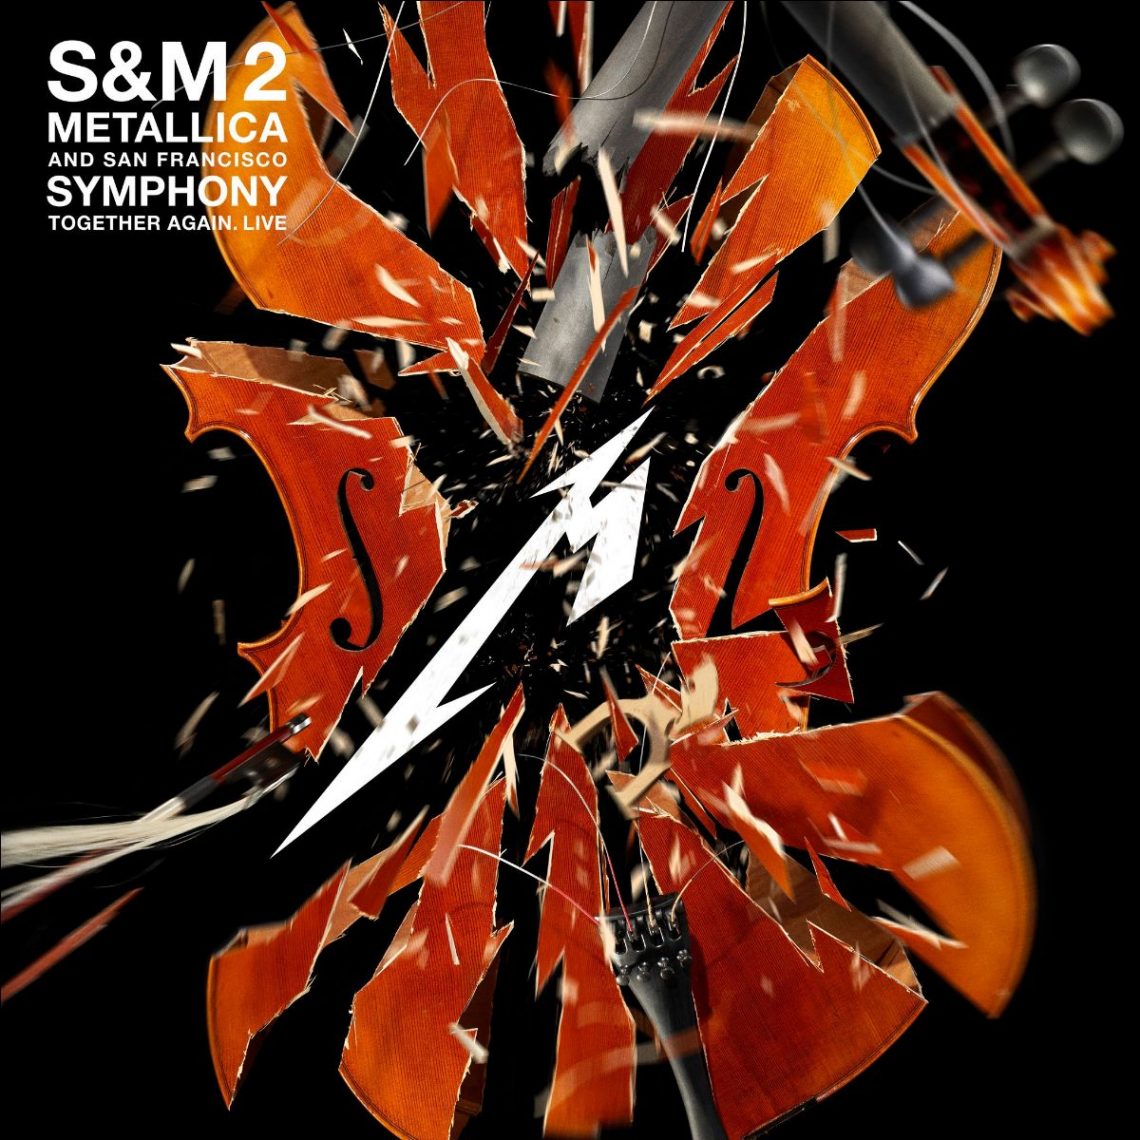 METALLICA & SAN FRANCISCO SYMPHONY: S&M2 LIVE ALBUM AND DOCUMENTARY AUGUST 28